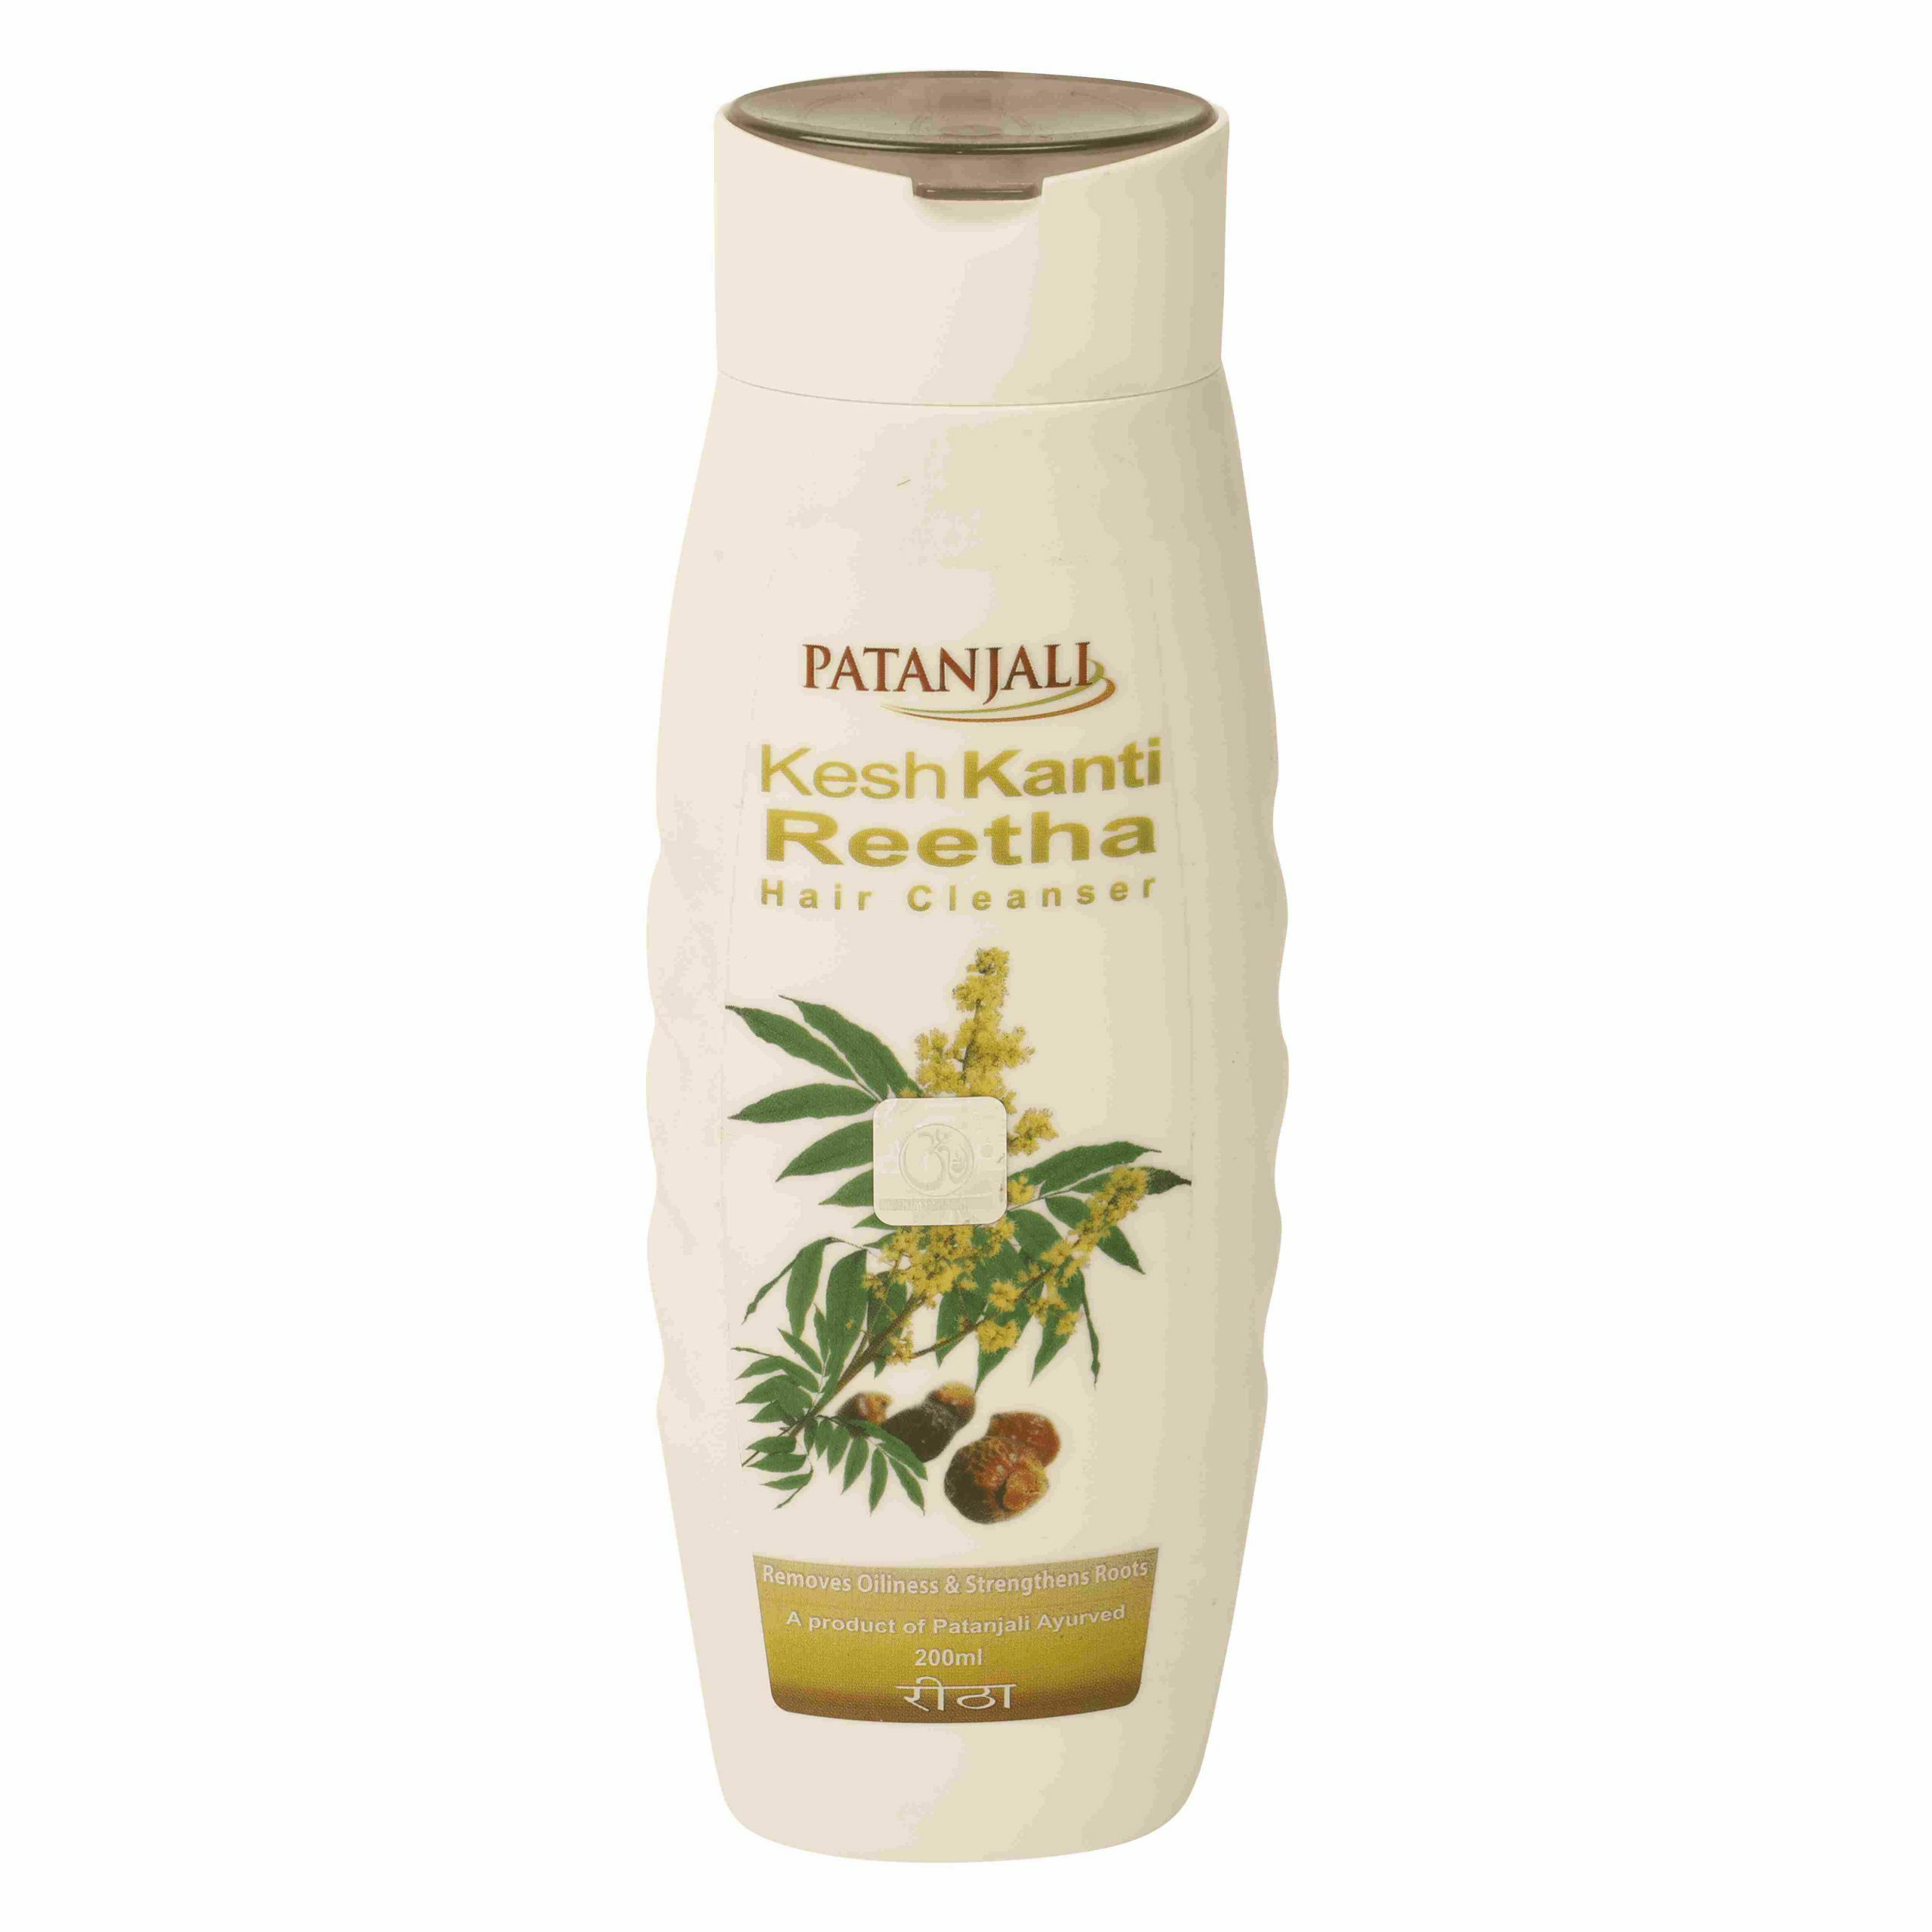 Patanjali Hair & Skin Care Combo (Kesh Kanti Natural Hair Cleanser (Reetha)  Shampoo - 200ml + Anti Wrinkle Cream - 50g + Amla Hair Oil - 200g +  Aloevera Gel - 60g +